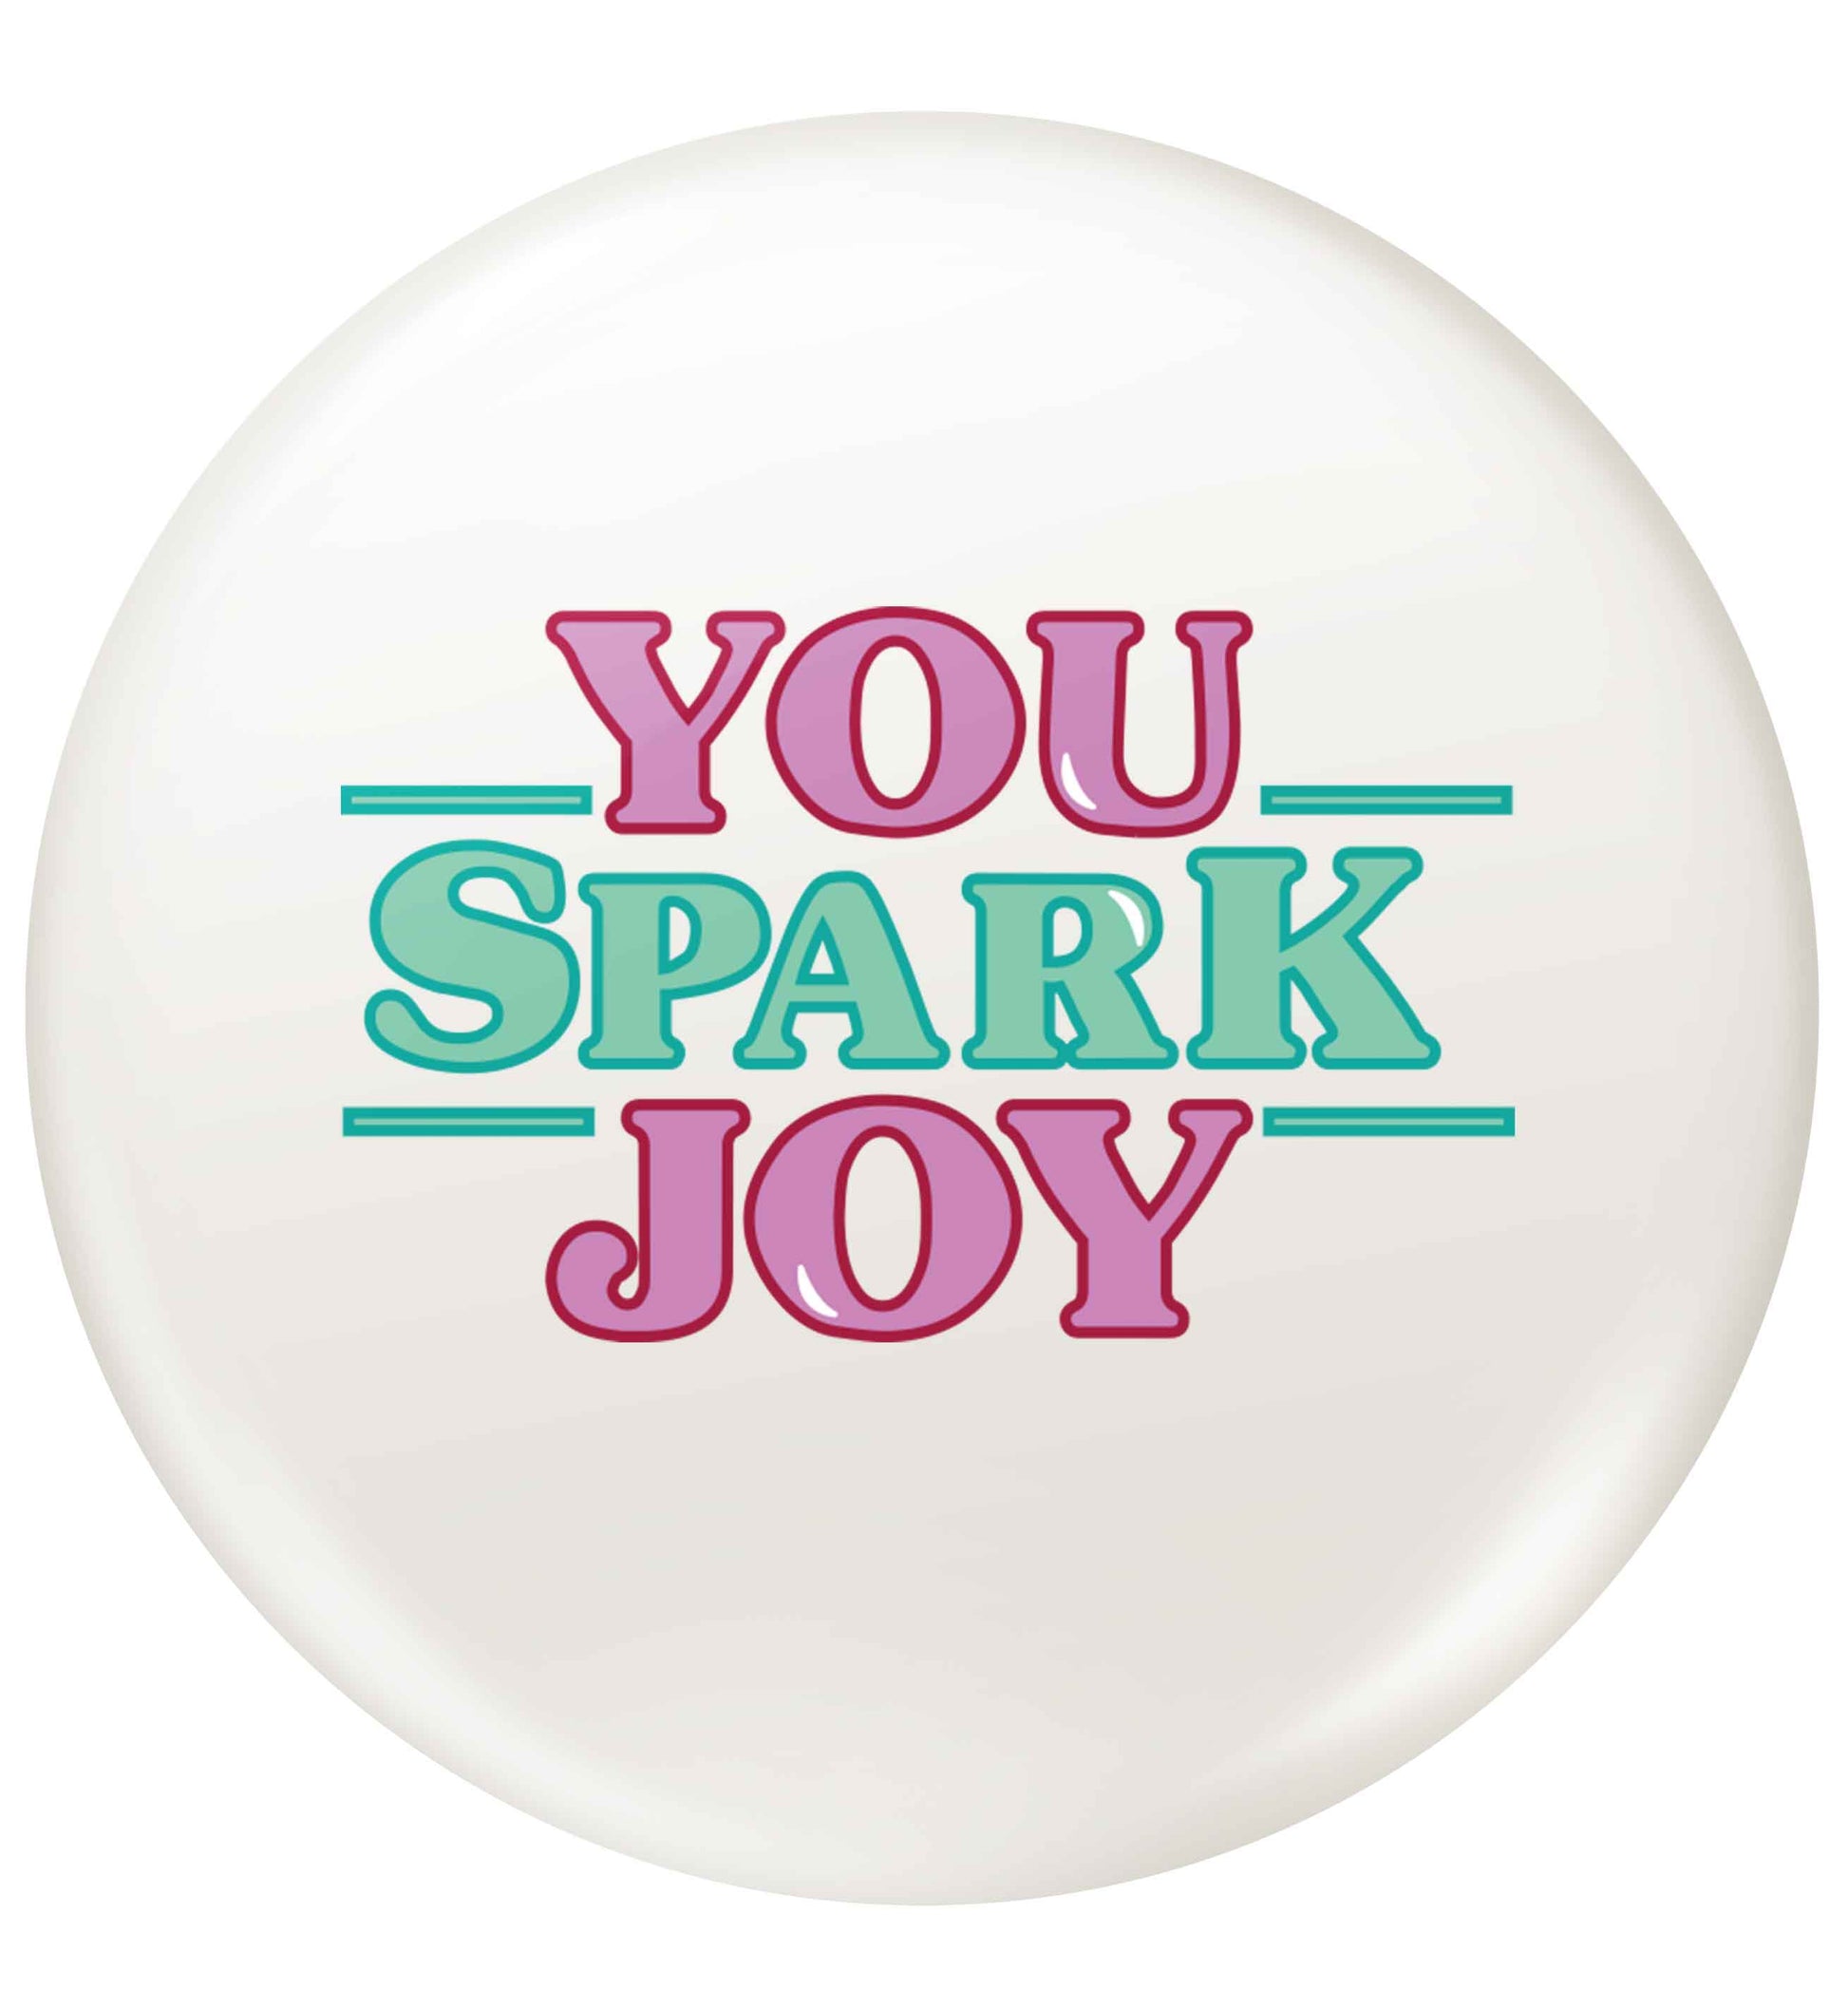 You spark joy small 25mm Pin badge